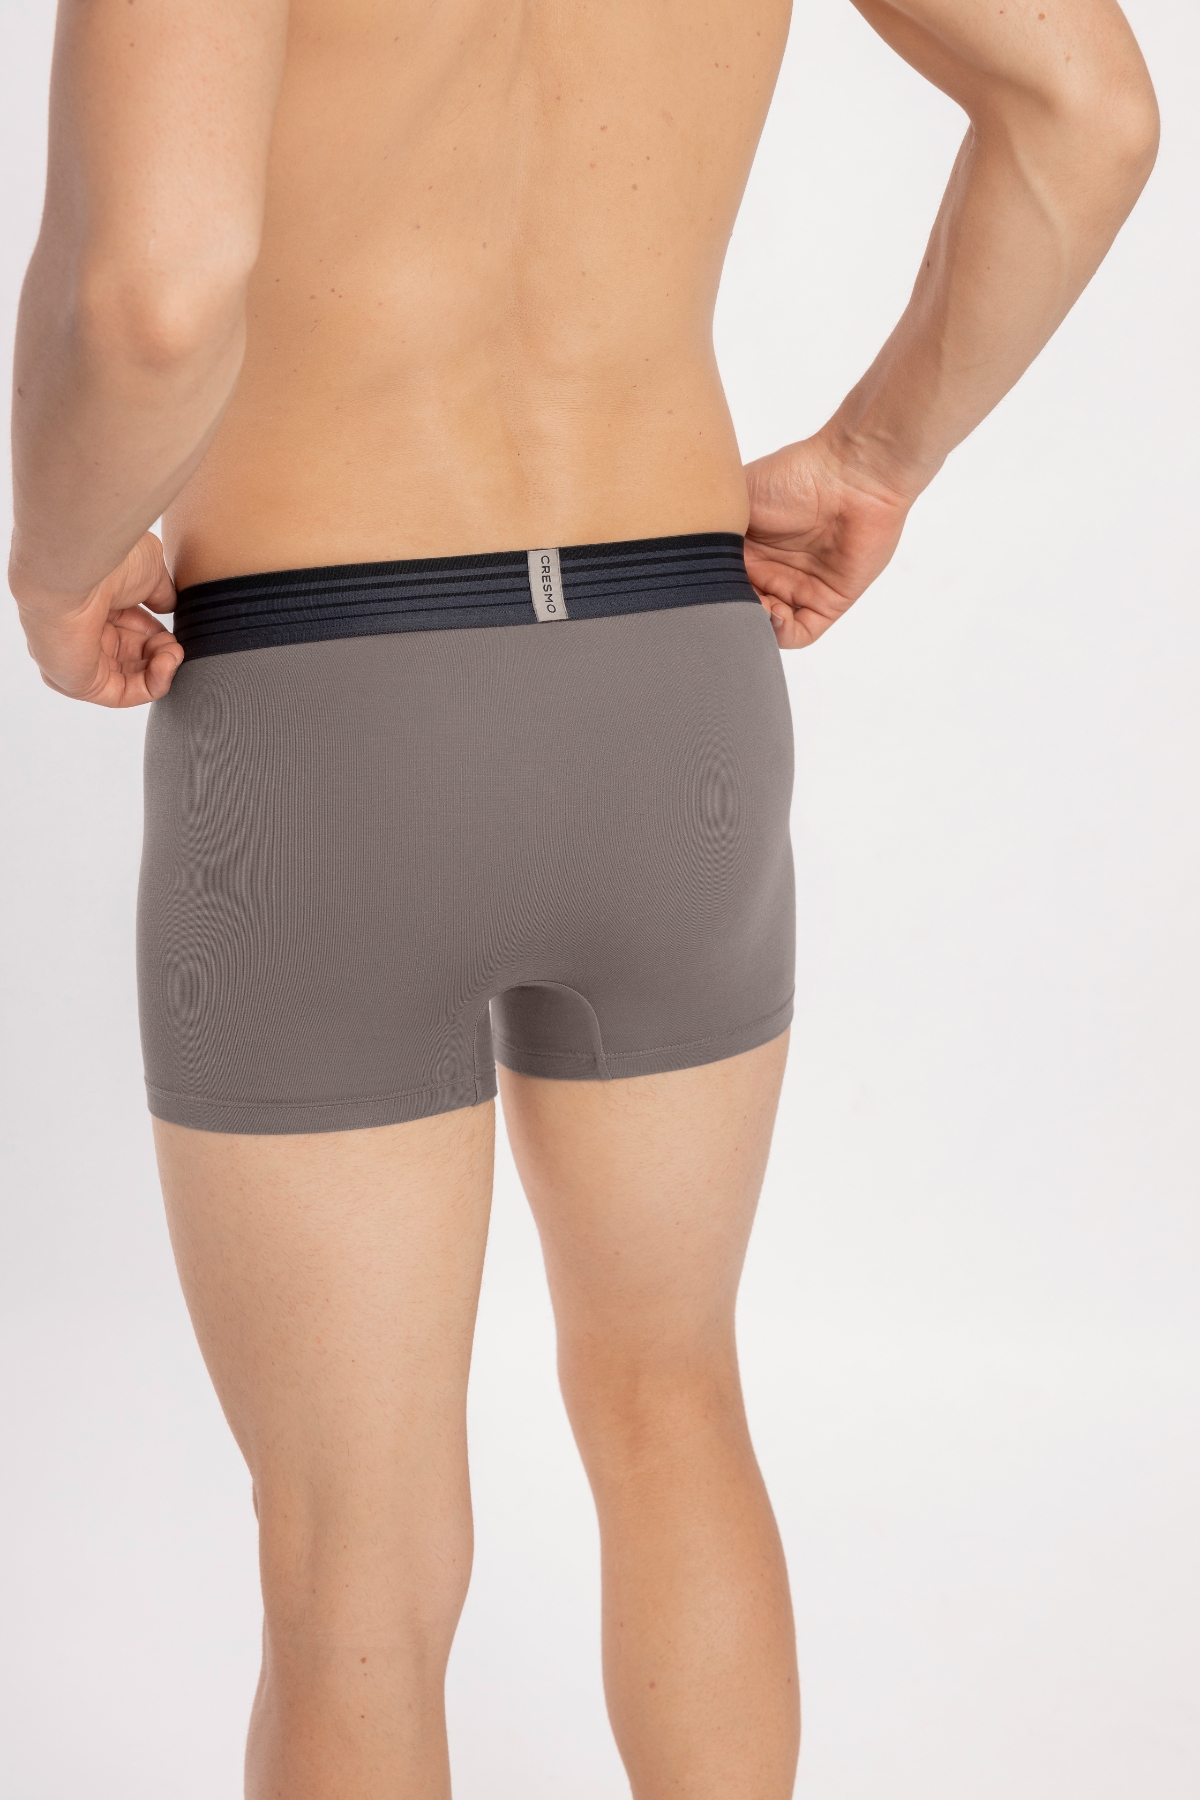 CRESMO Men's Anti-Microbial Micro Modal Underwear Breathable Ultra Soft  Trunk